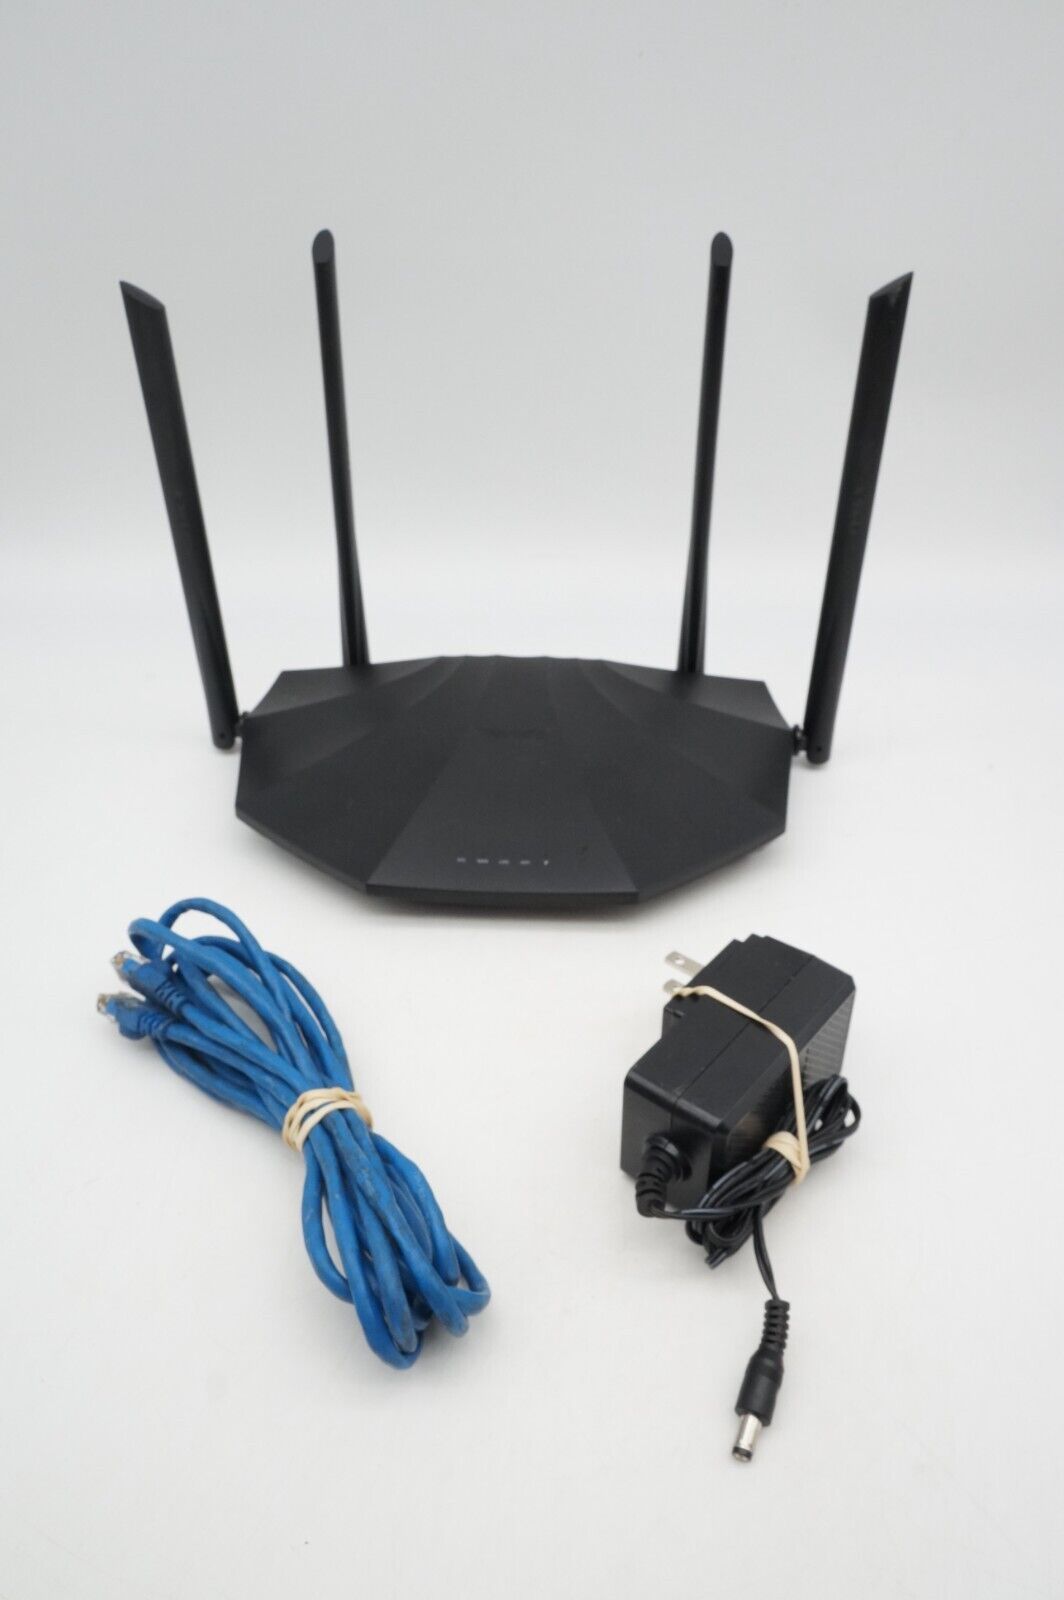 Tenda AC19 AC2100 WiFi Router Dual Band Gigabit Wireless Internet Router